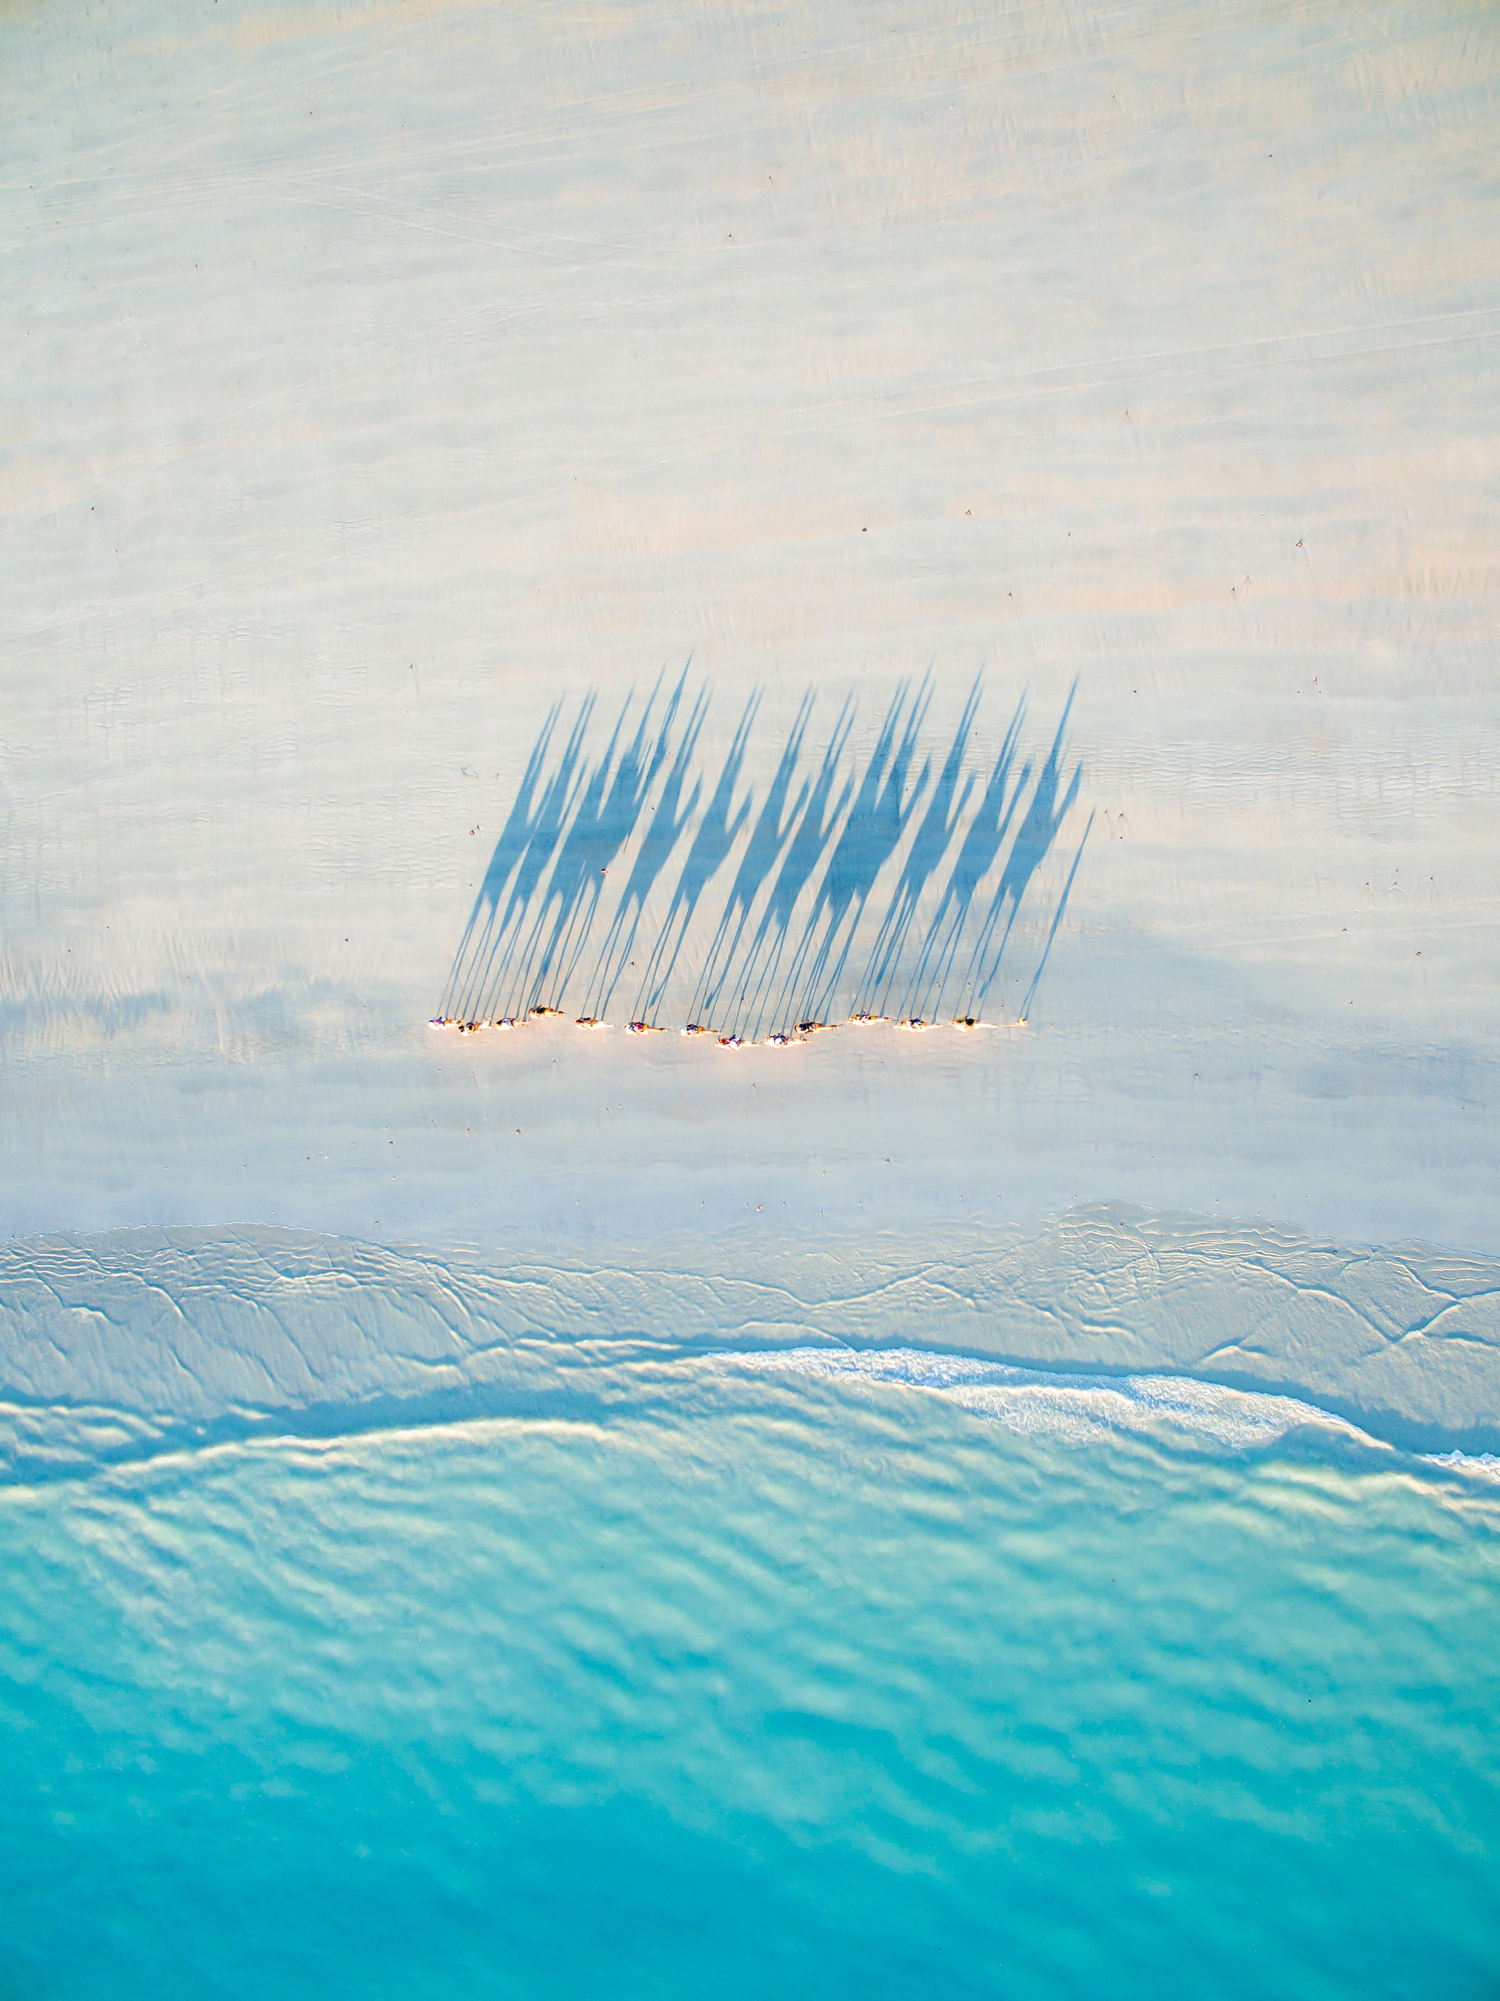 dronestagram 2016 contest beach camel caravan